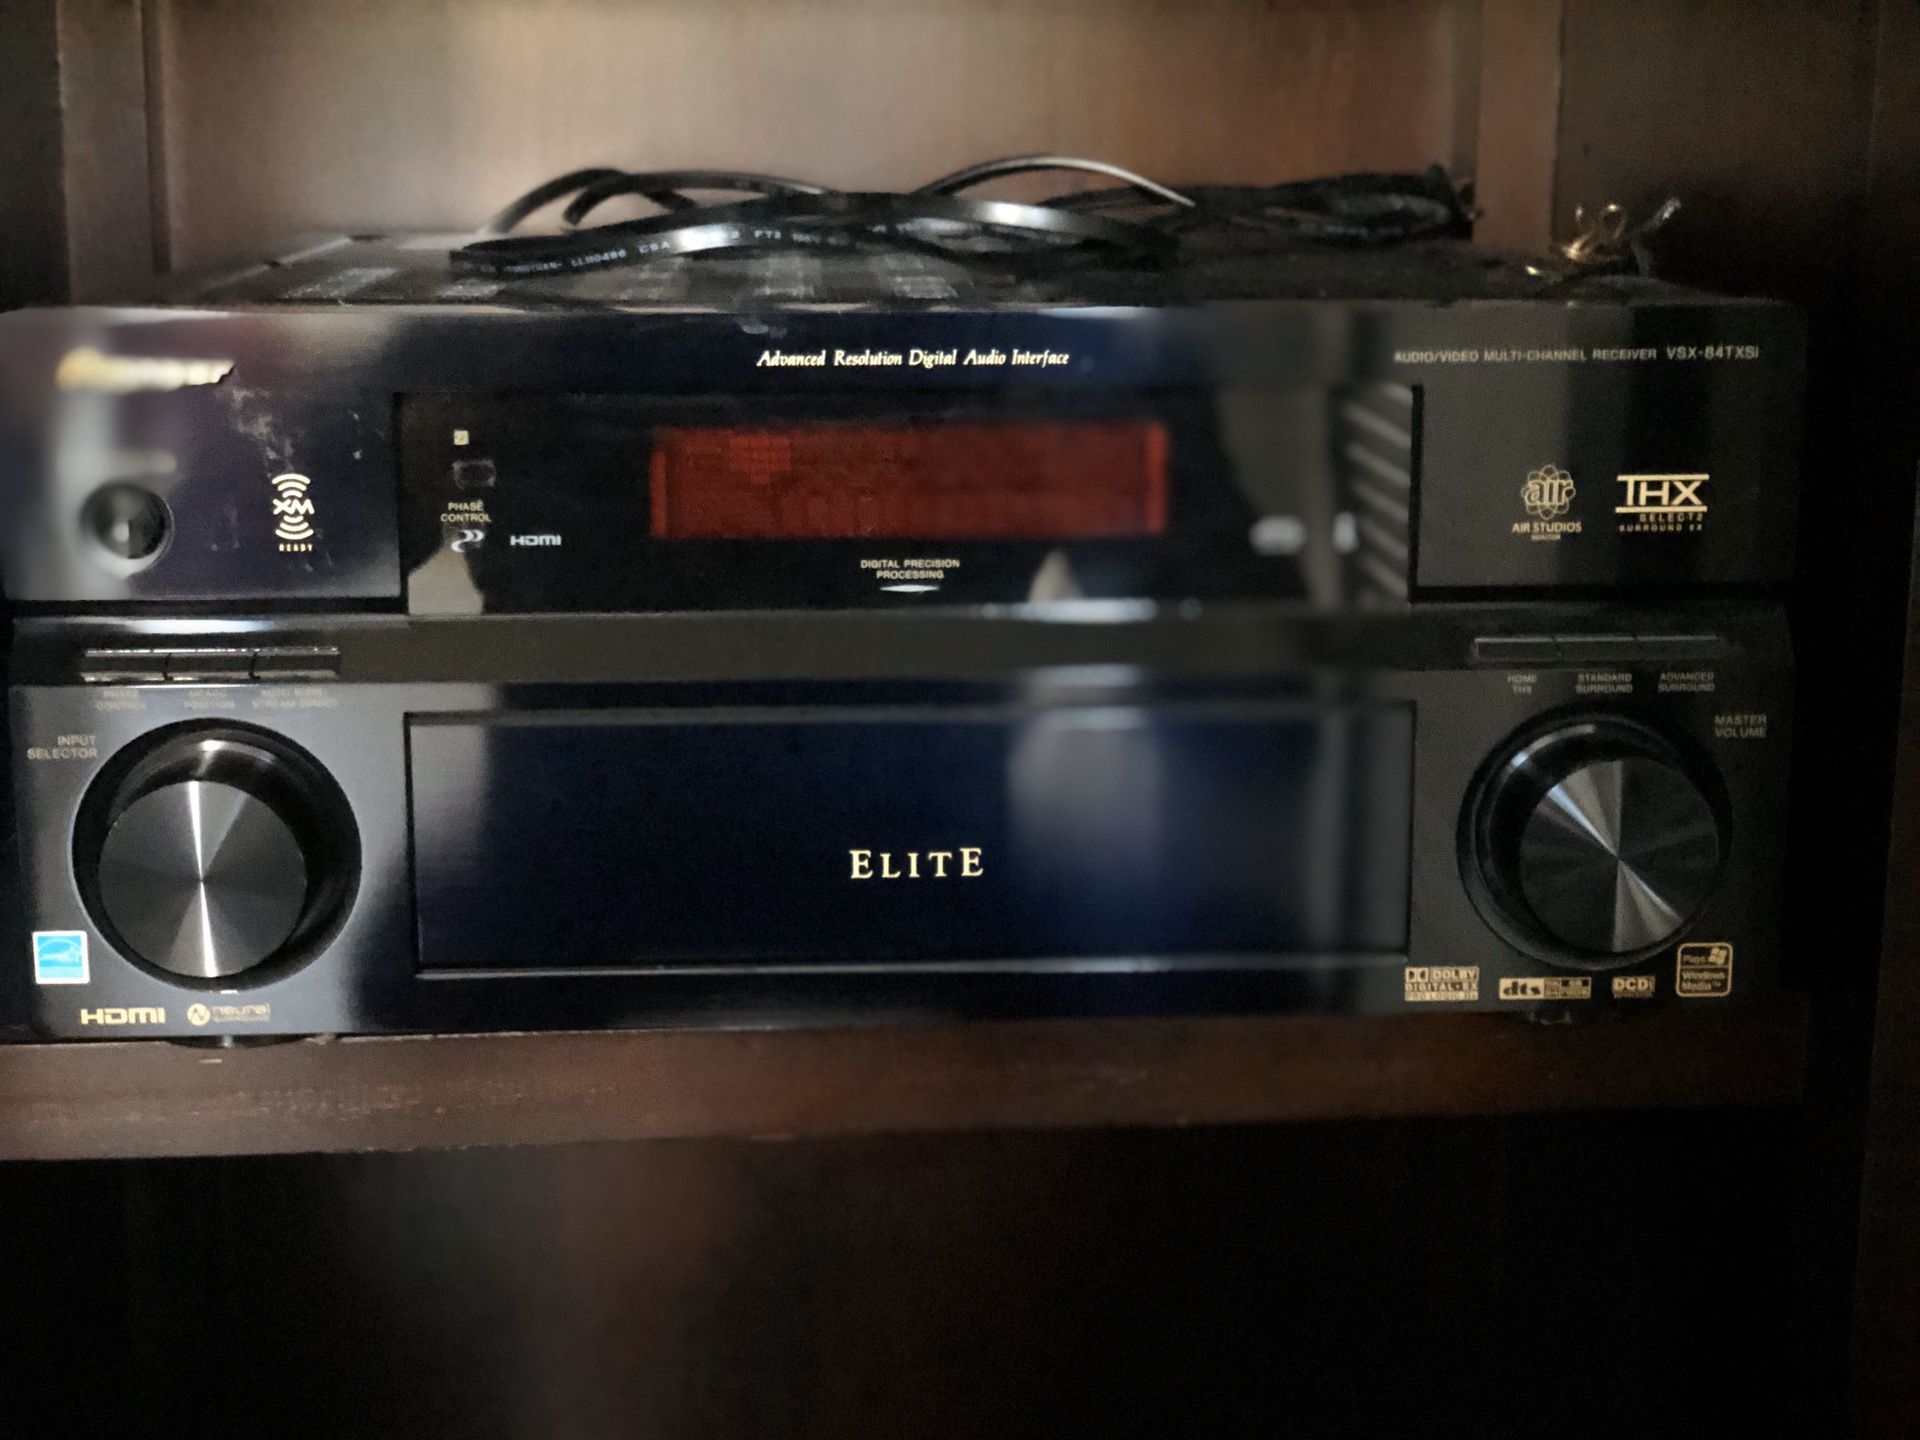 Pioneer elite receiver + Home theater (Definitive speakers)